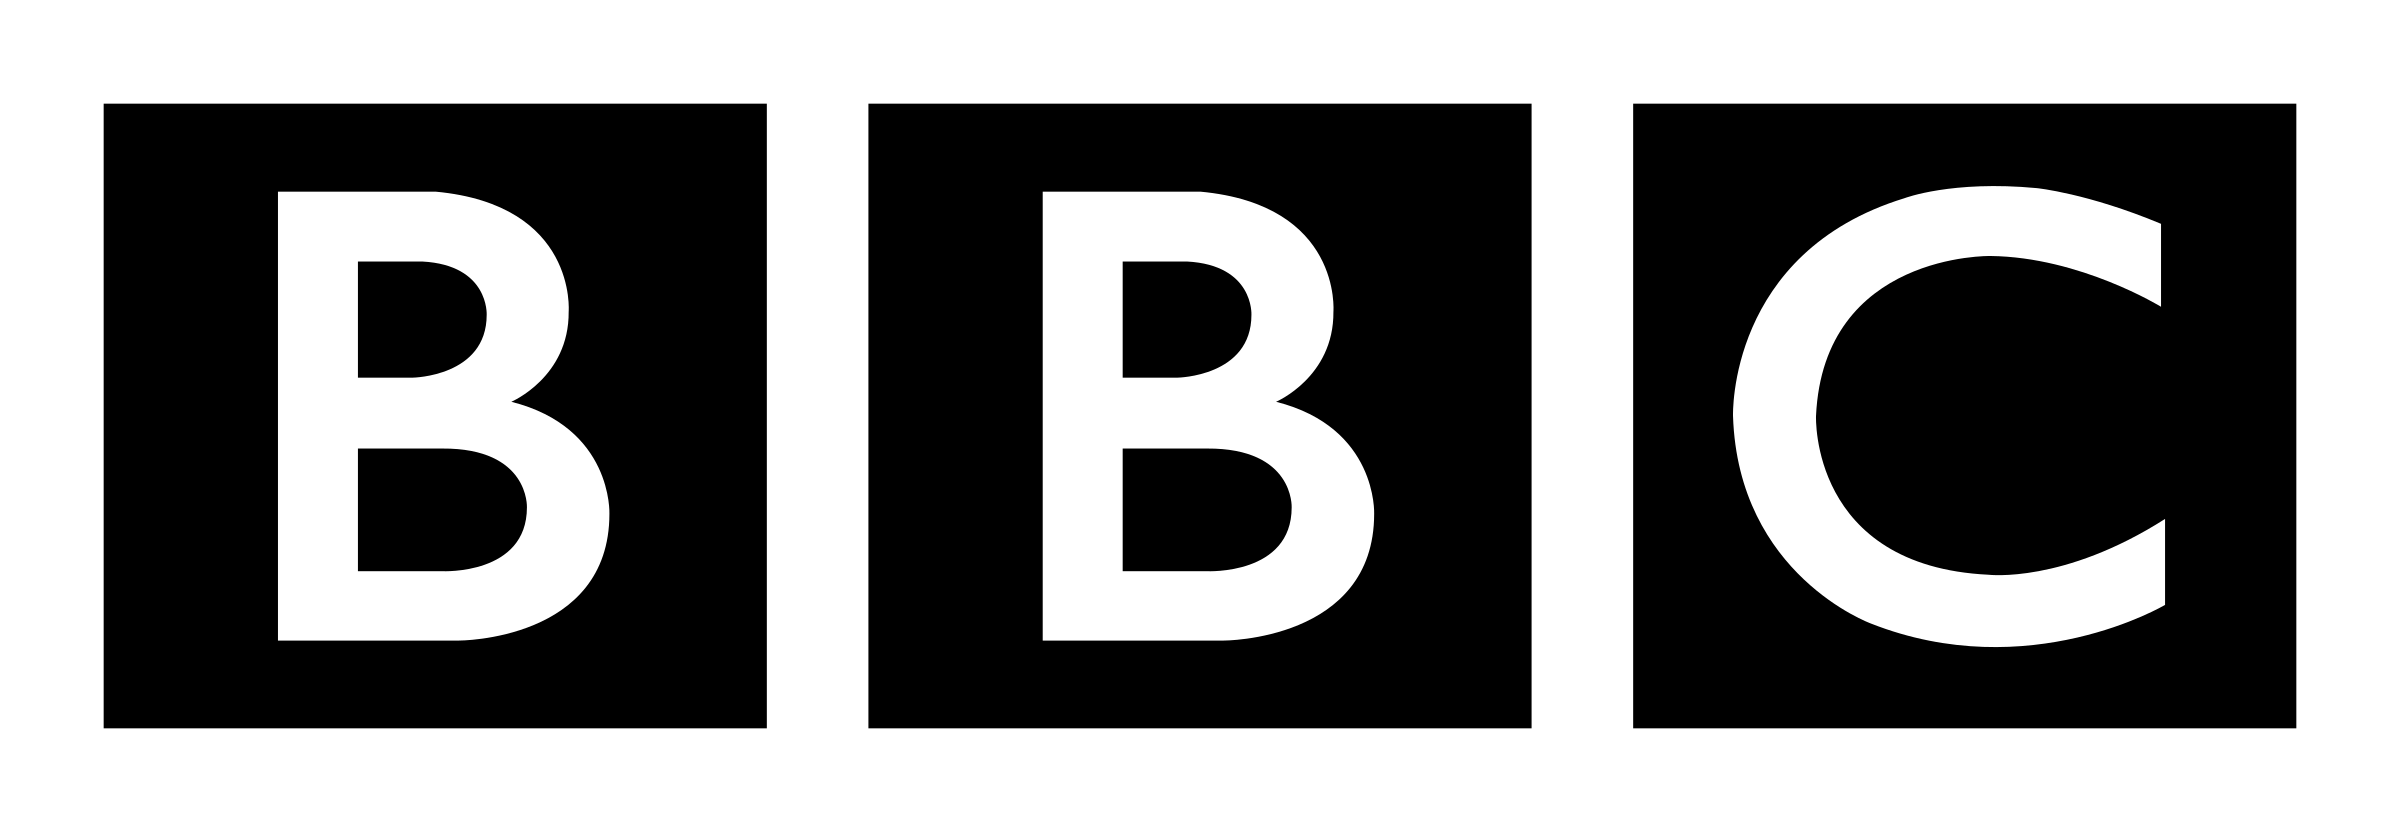 Bbc Logo PNG - 178604